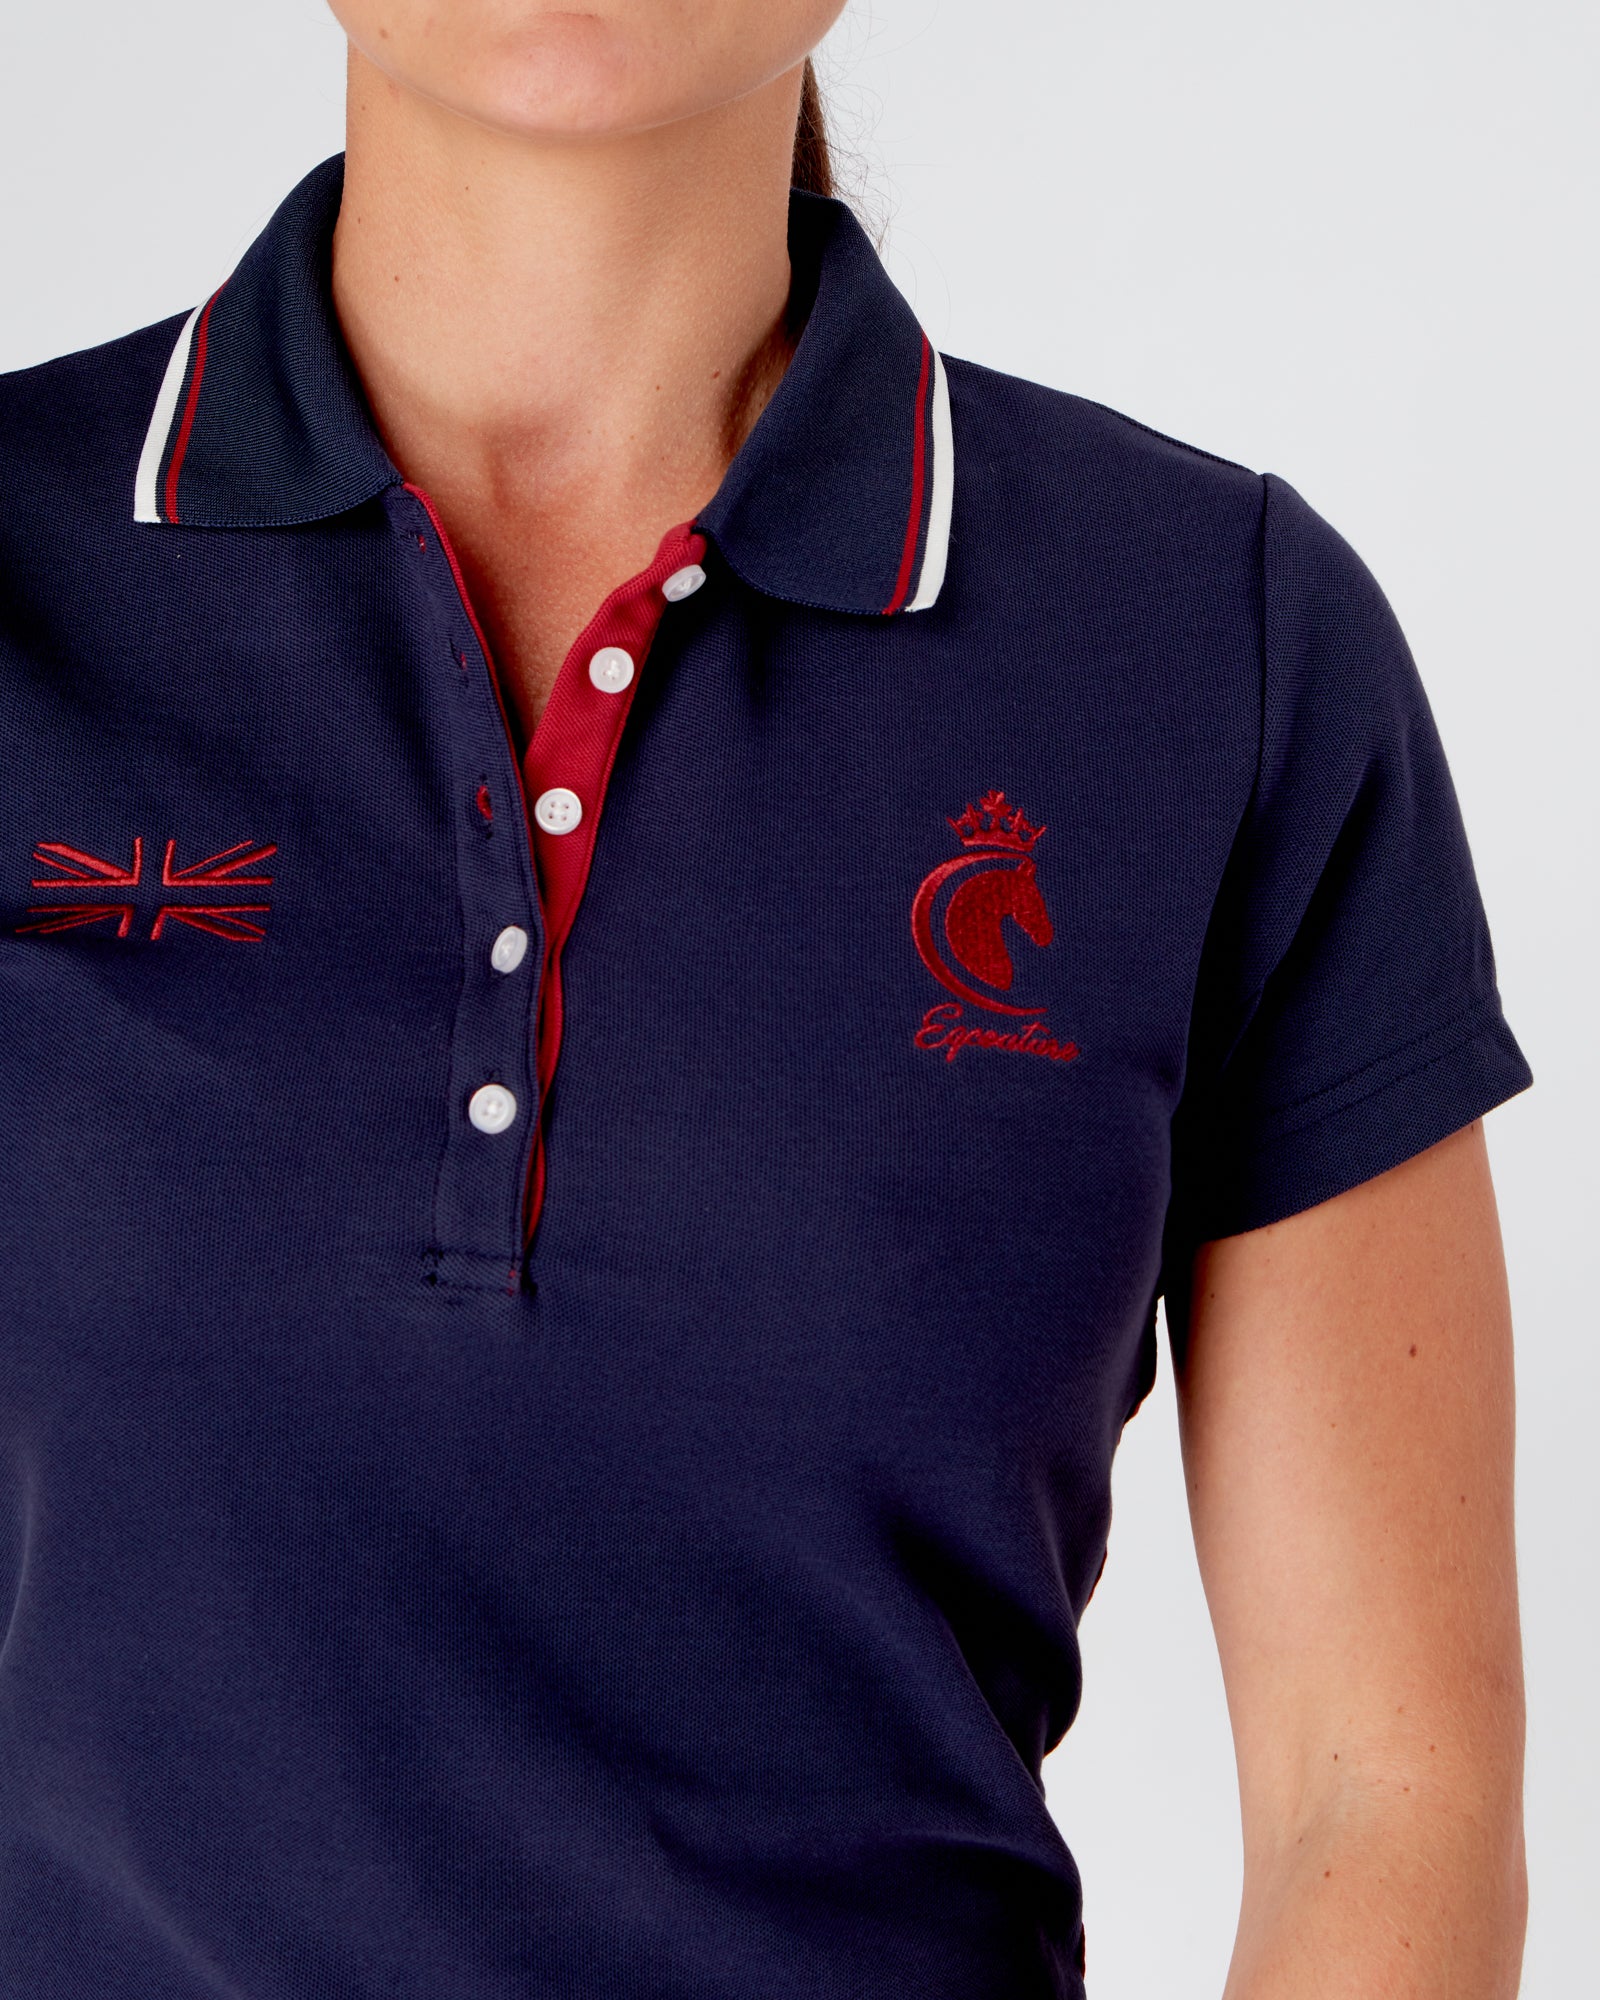 TEAM Women's Polo Shirt Short Sleeve- NAVY